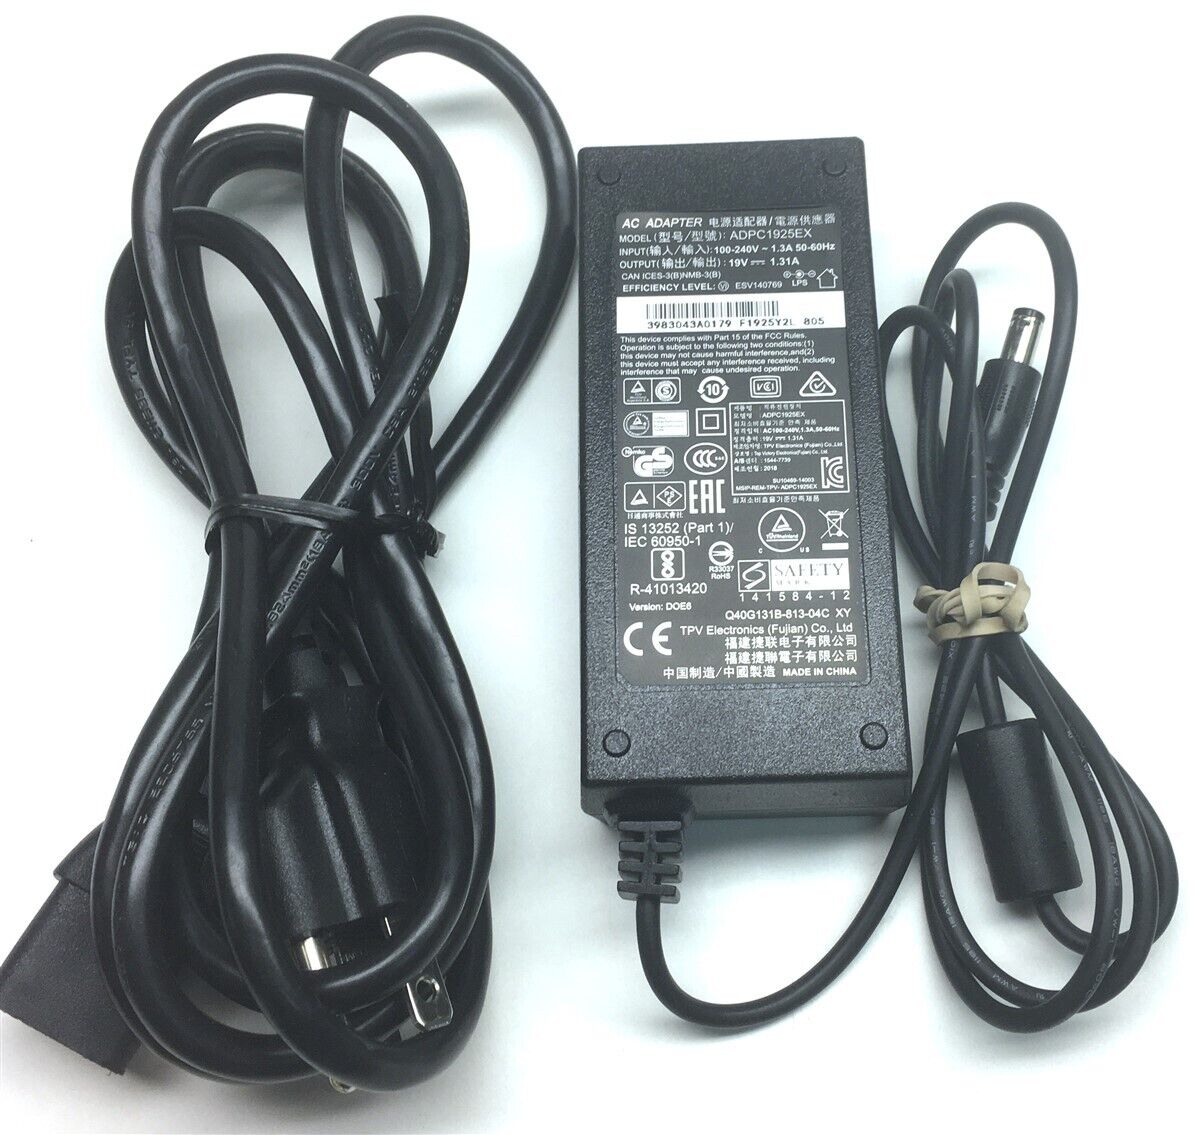 Genuine TPV AC Adapter Power Supply for AOC Monitors ADPC1925EX 19V 1.31A 25W